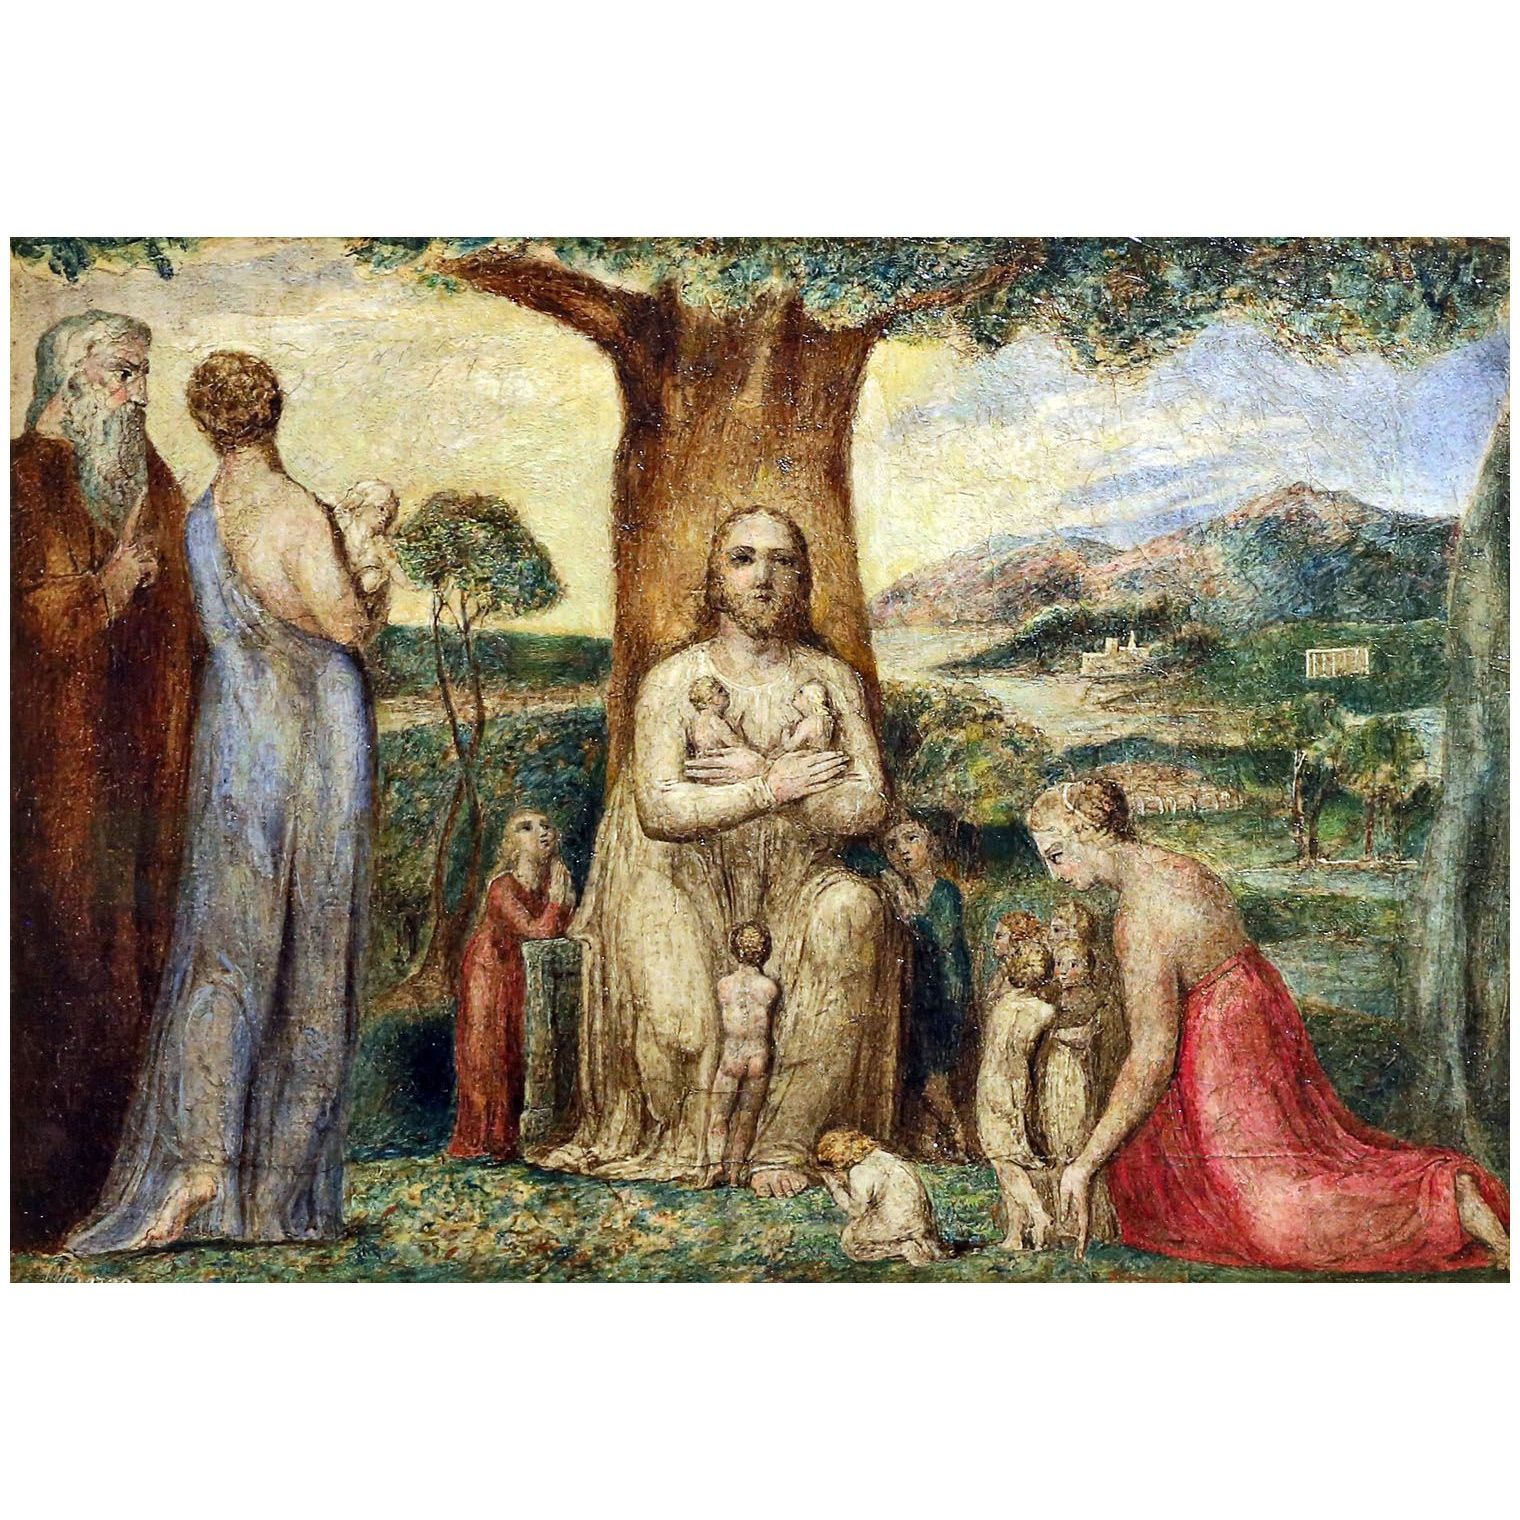 William Blake. Christ Blesses the Children. 1799. Tate Britain